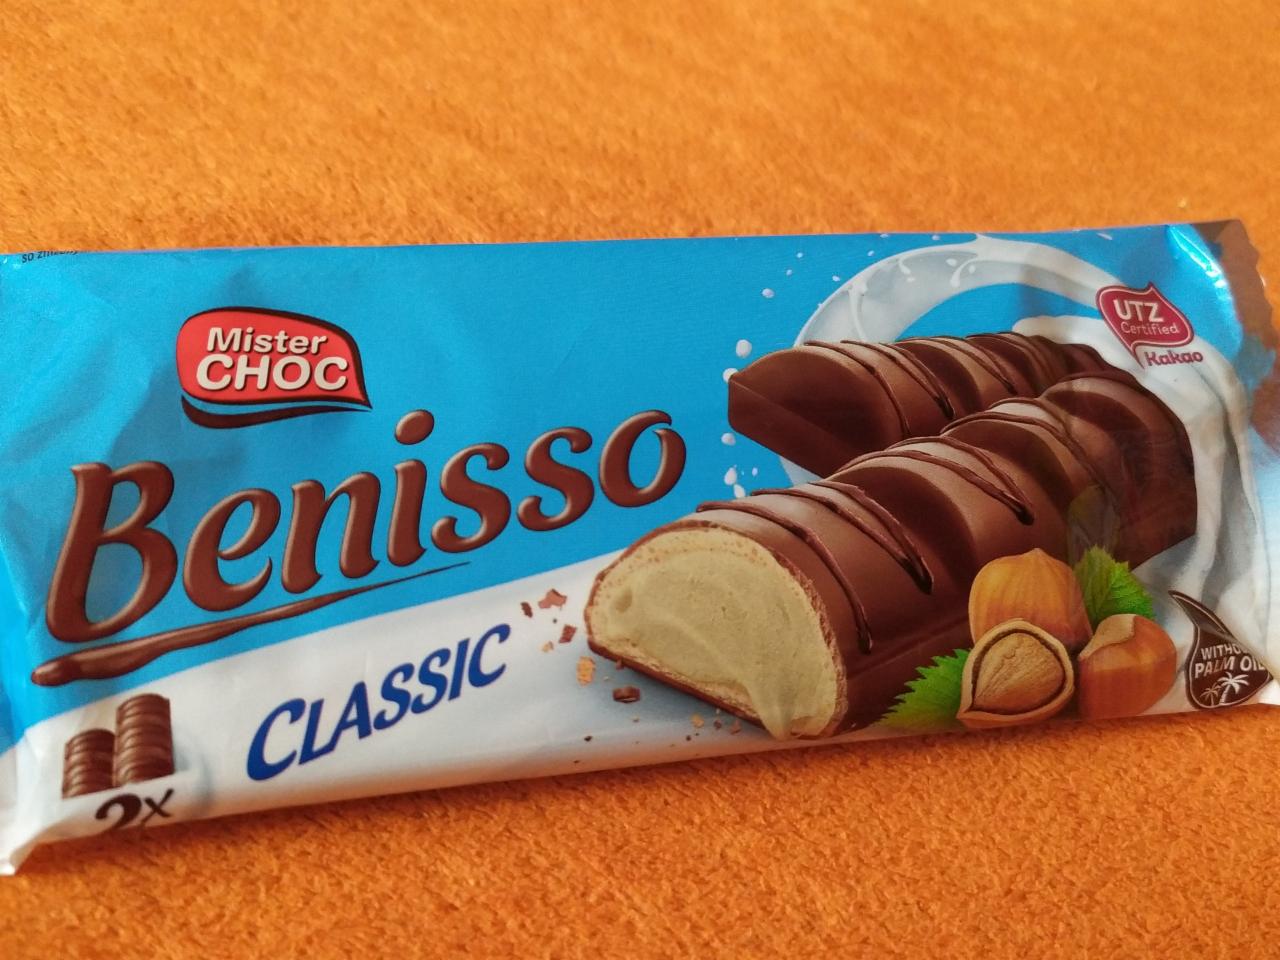 Fotografie - Benisso classic Mister Choc